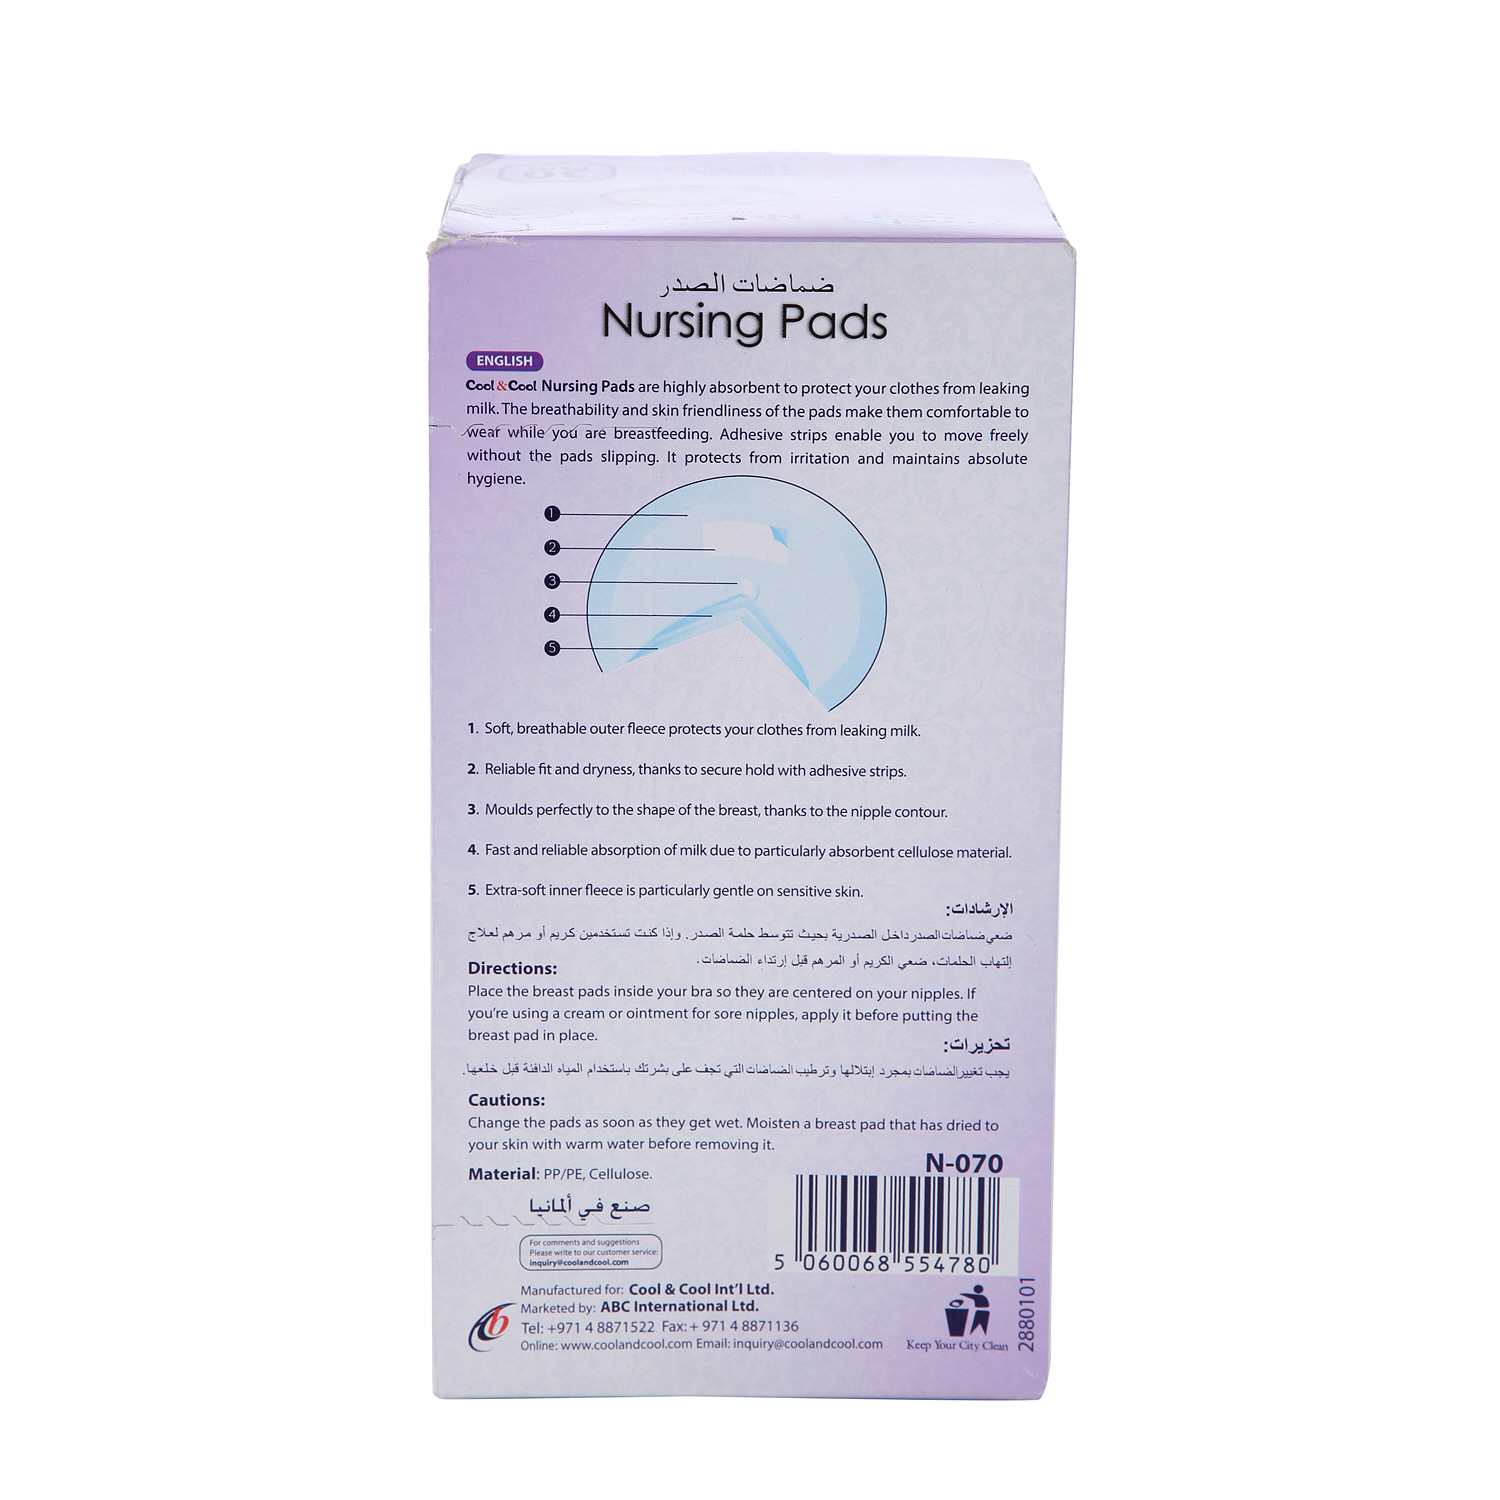 Cool & Cool Nursing Pads Hygienic 30 pads